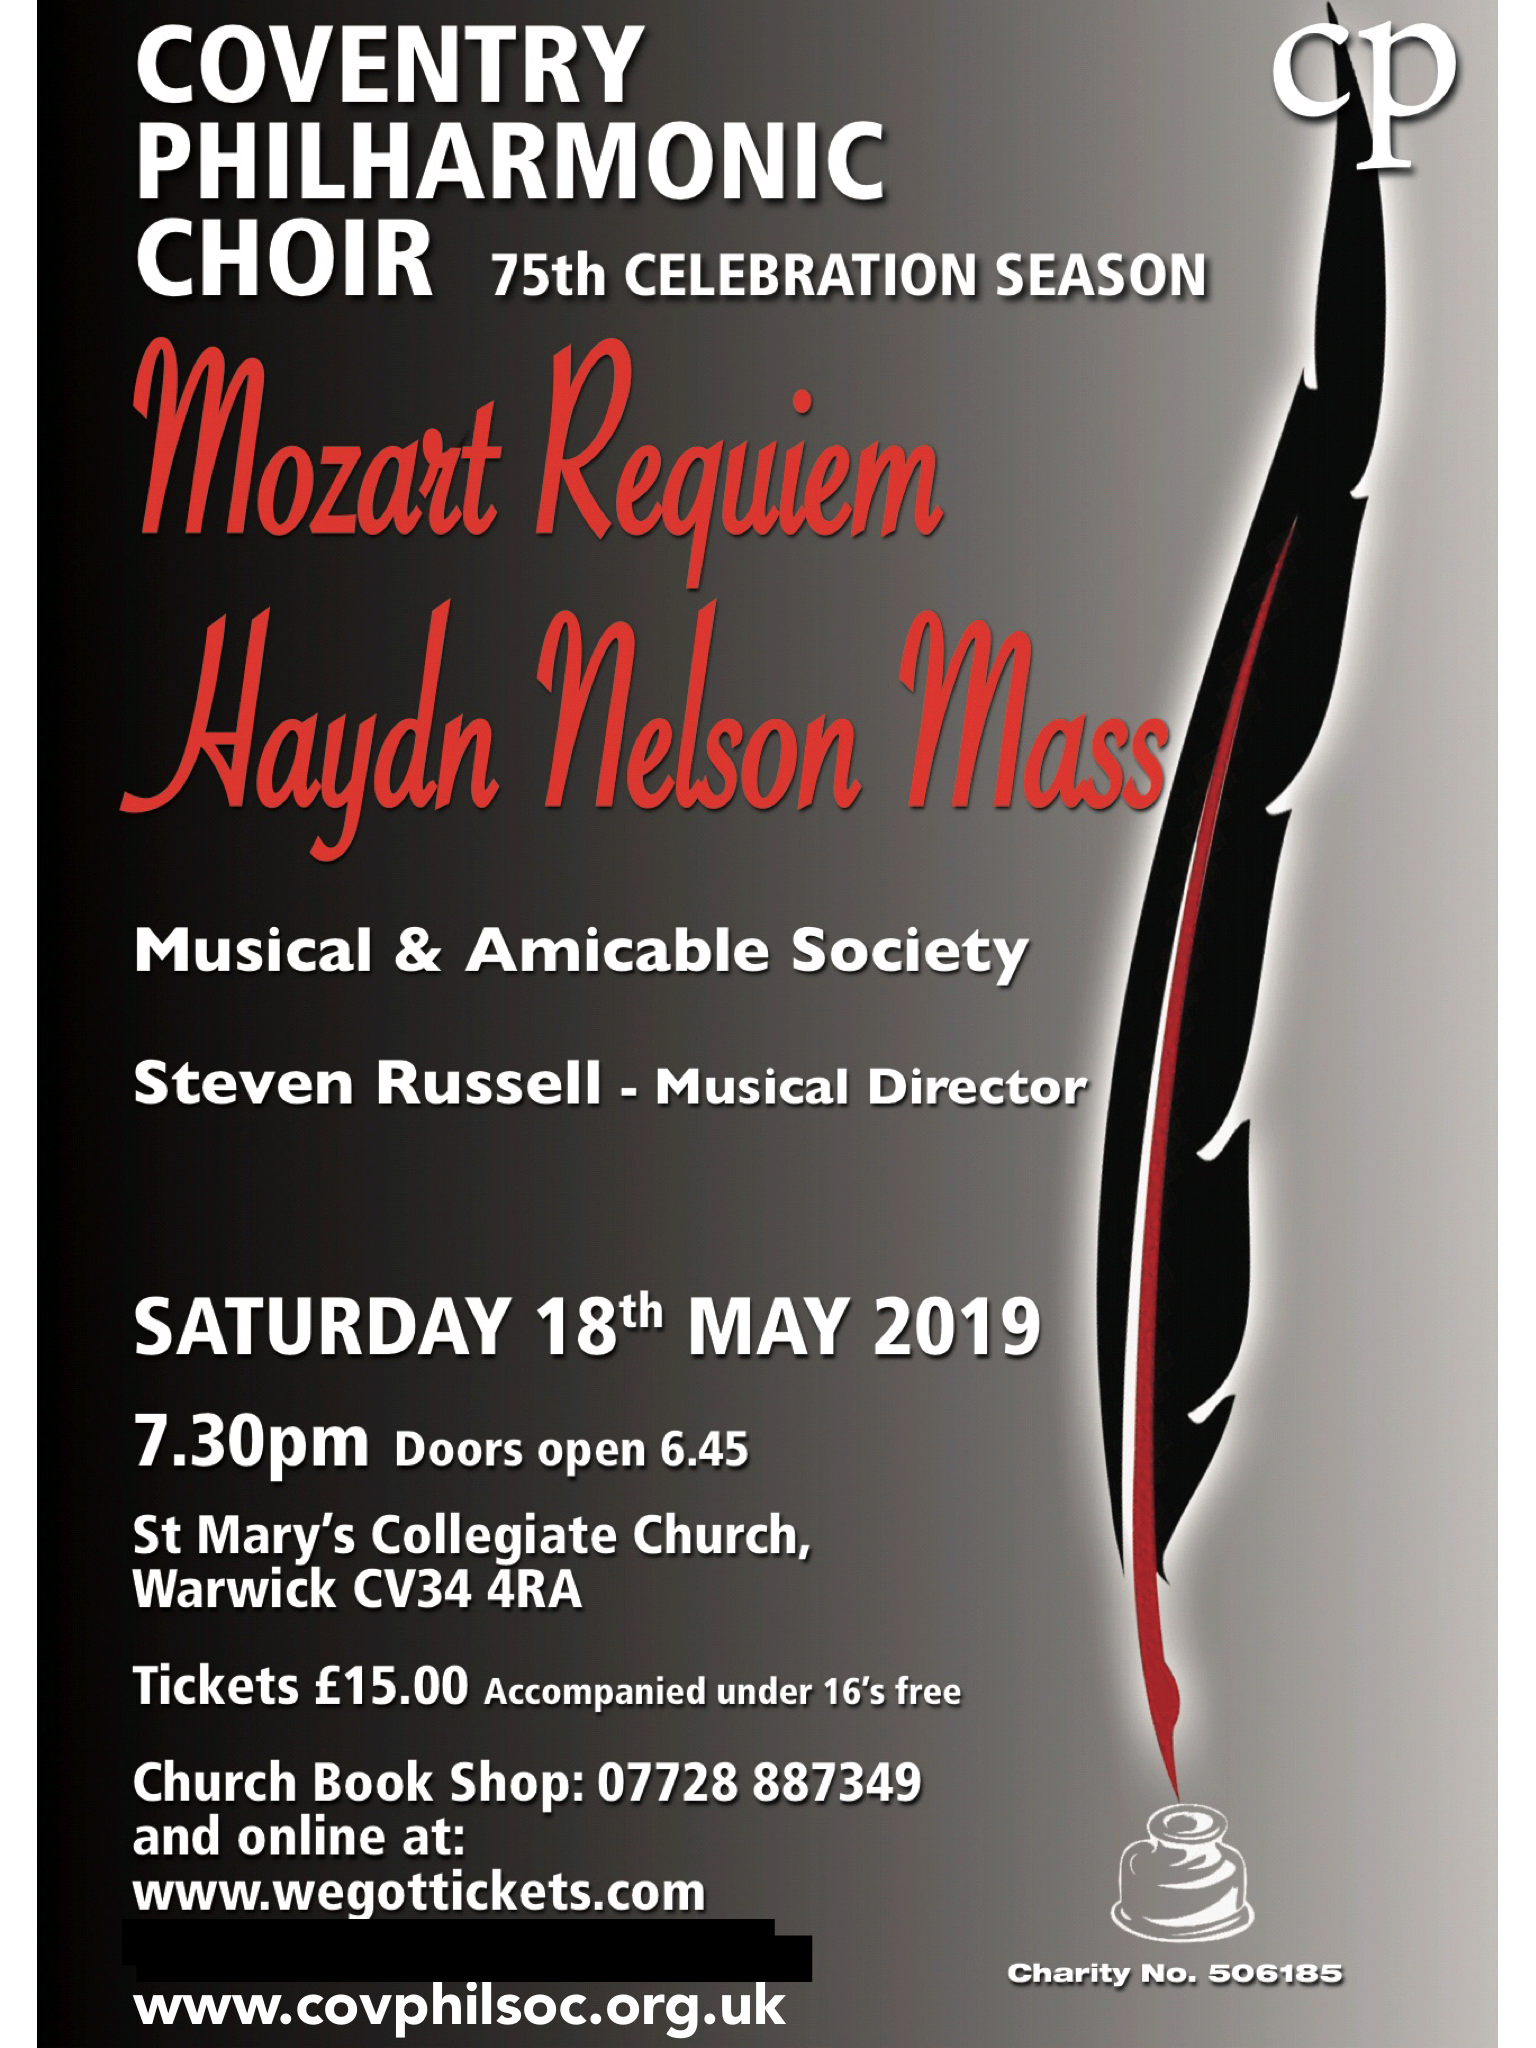 Haydn “Nelson Mass” and Mozart Requiem